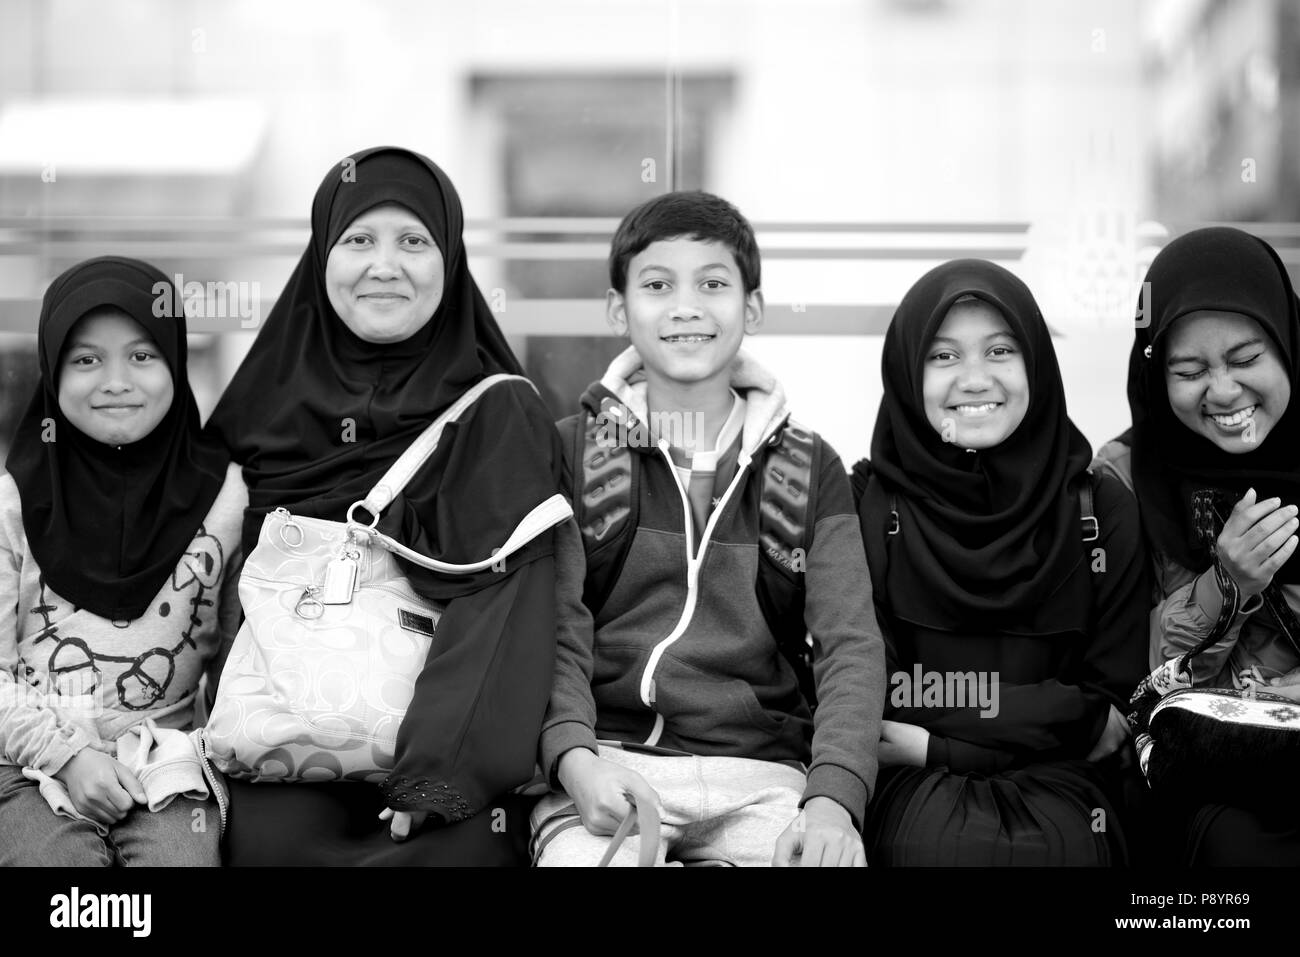 happy Muslim family smiling and having fun in Islamic dress, Islamic dress code Stock Photo